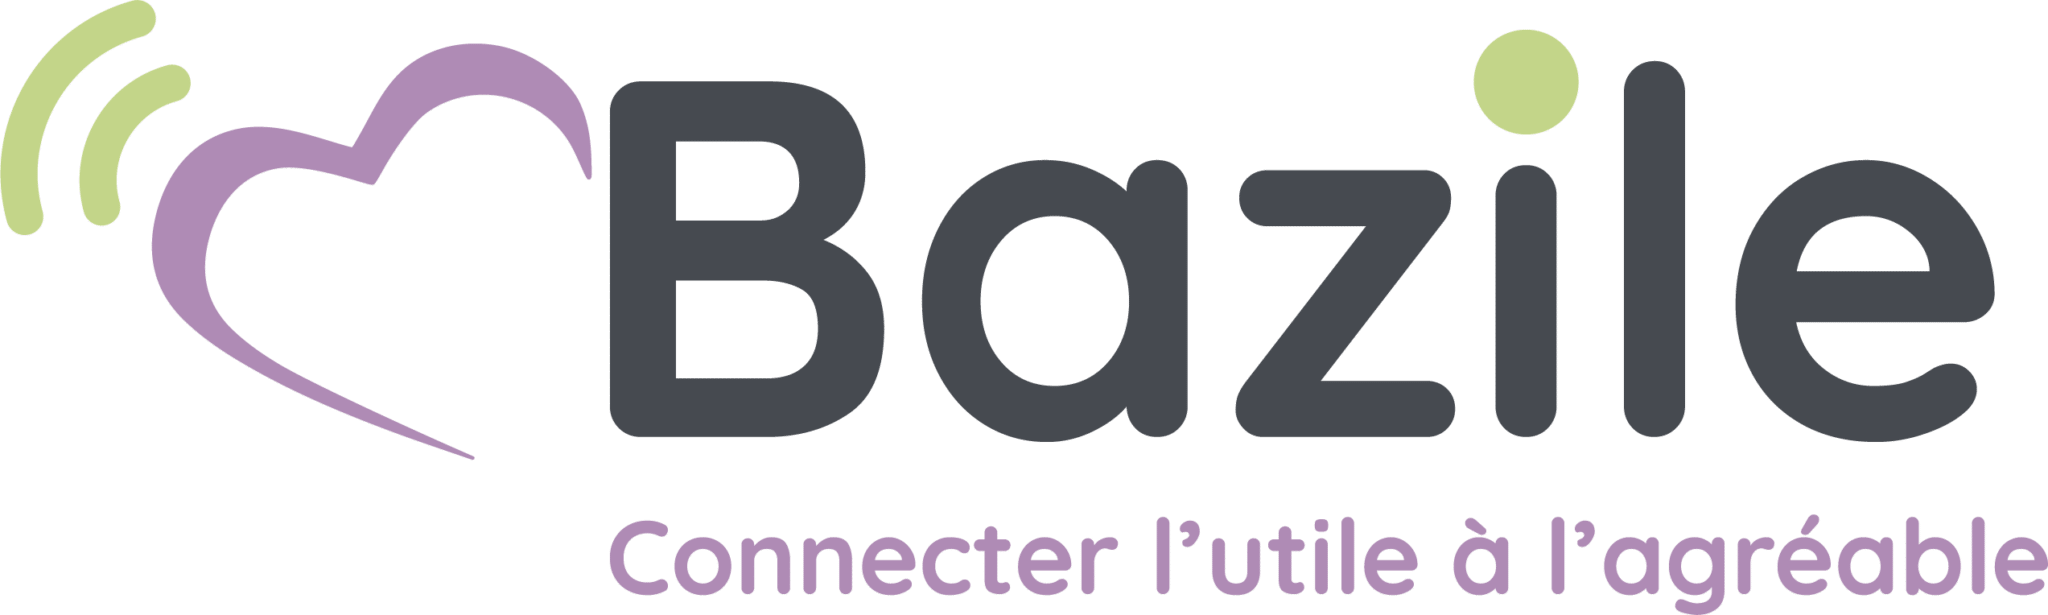 Logo Bazile